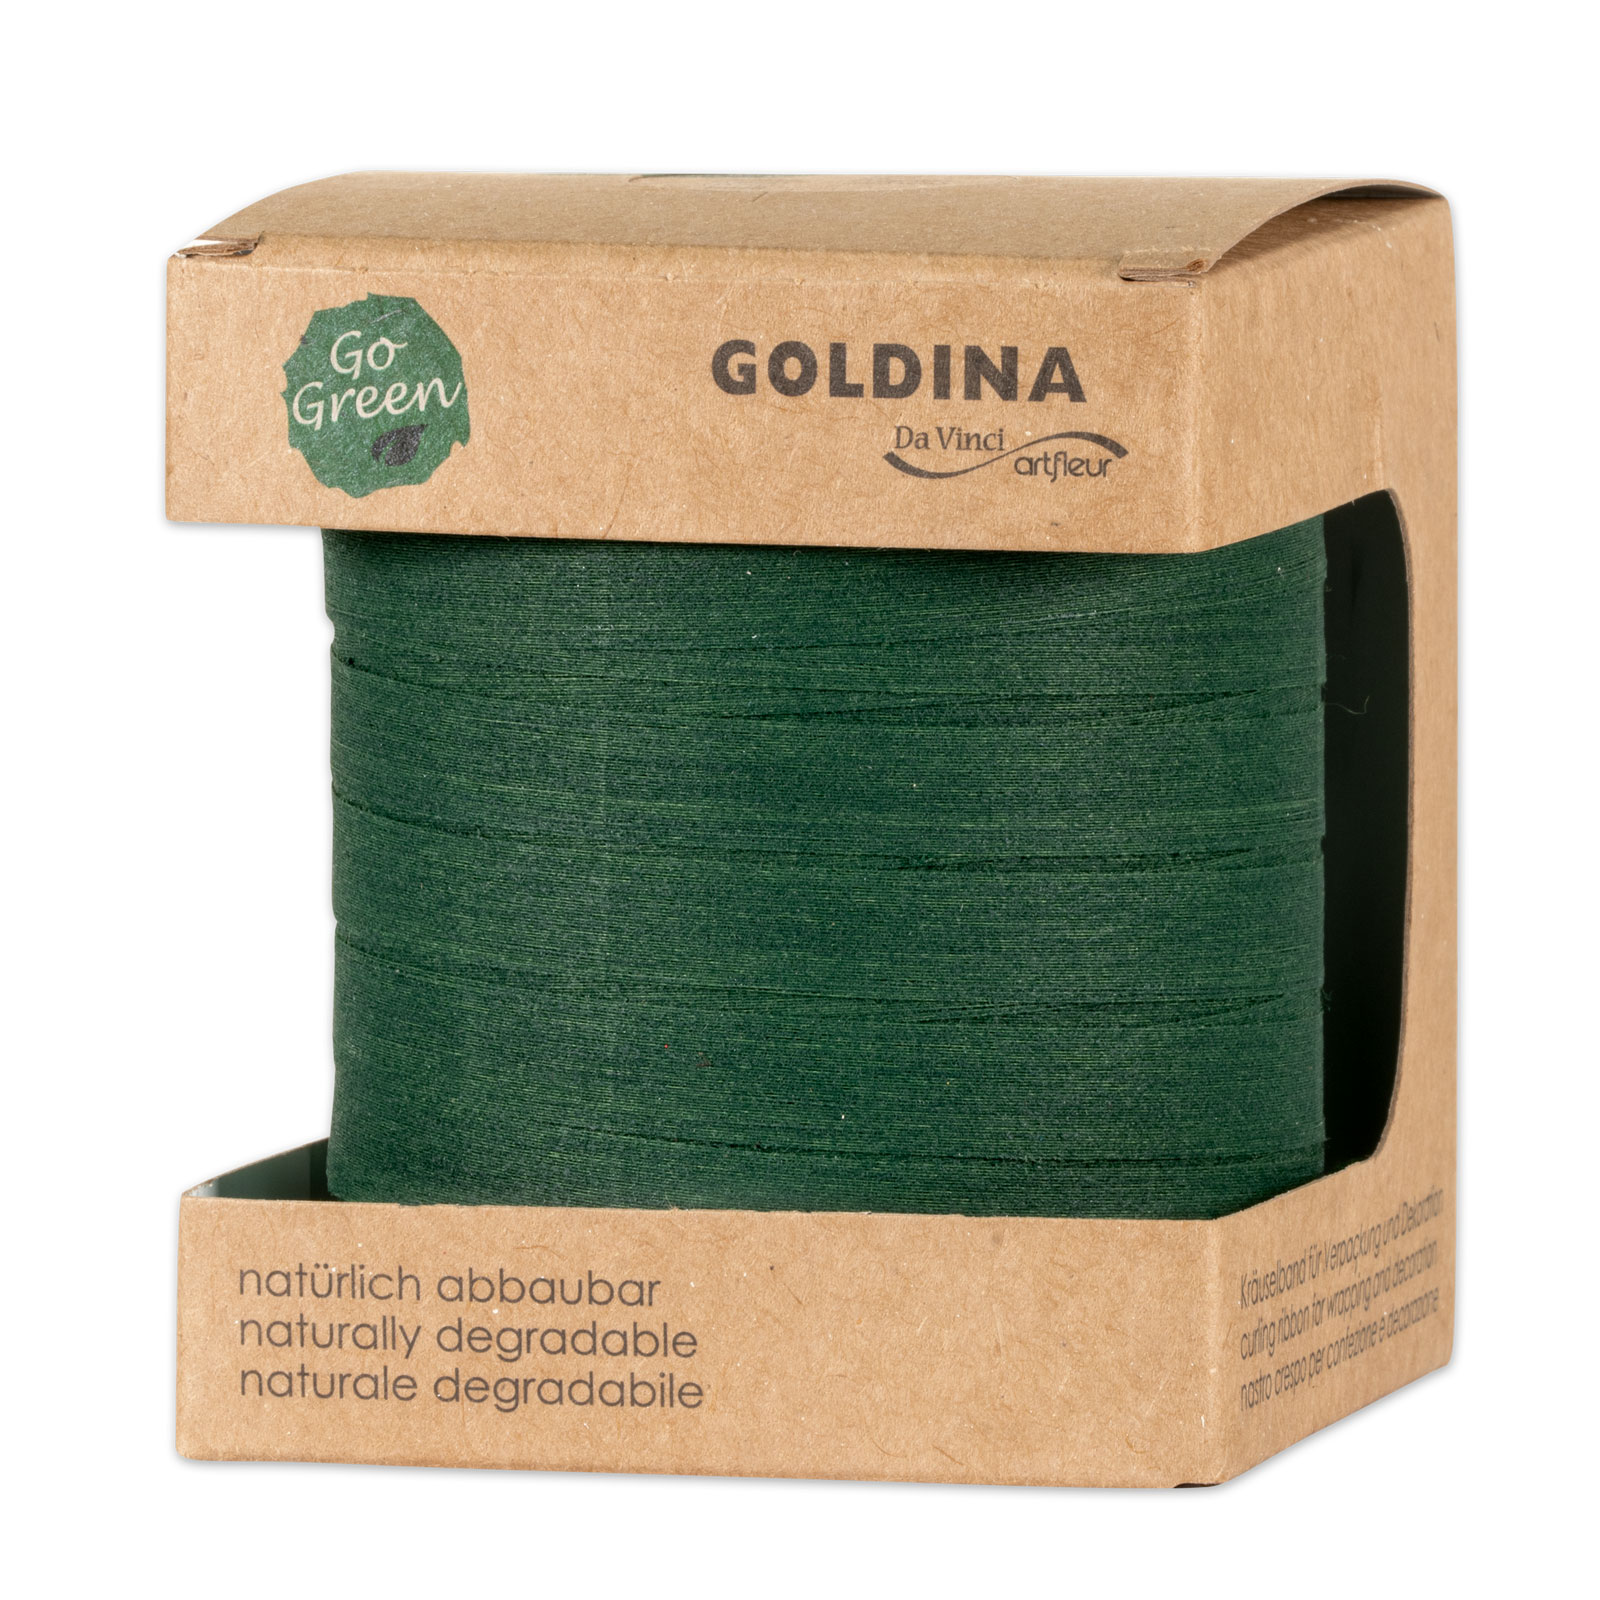 Ringelband Baumwolle Grün 10mm biologisch abbaubar 100m